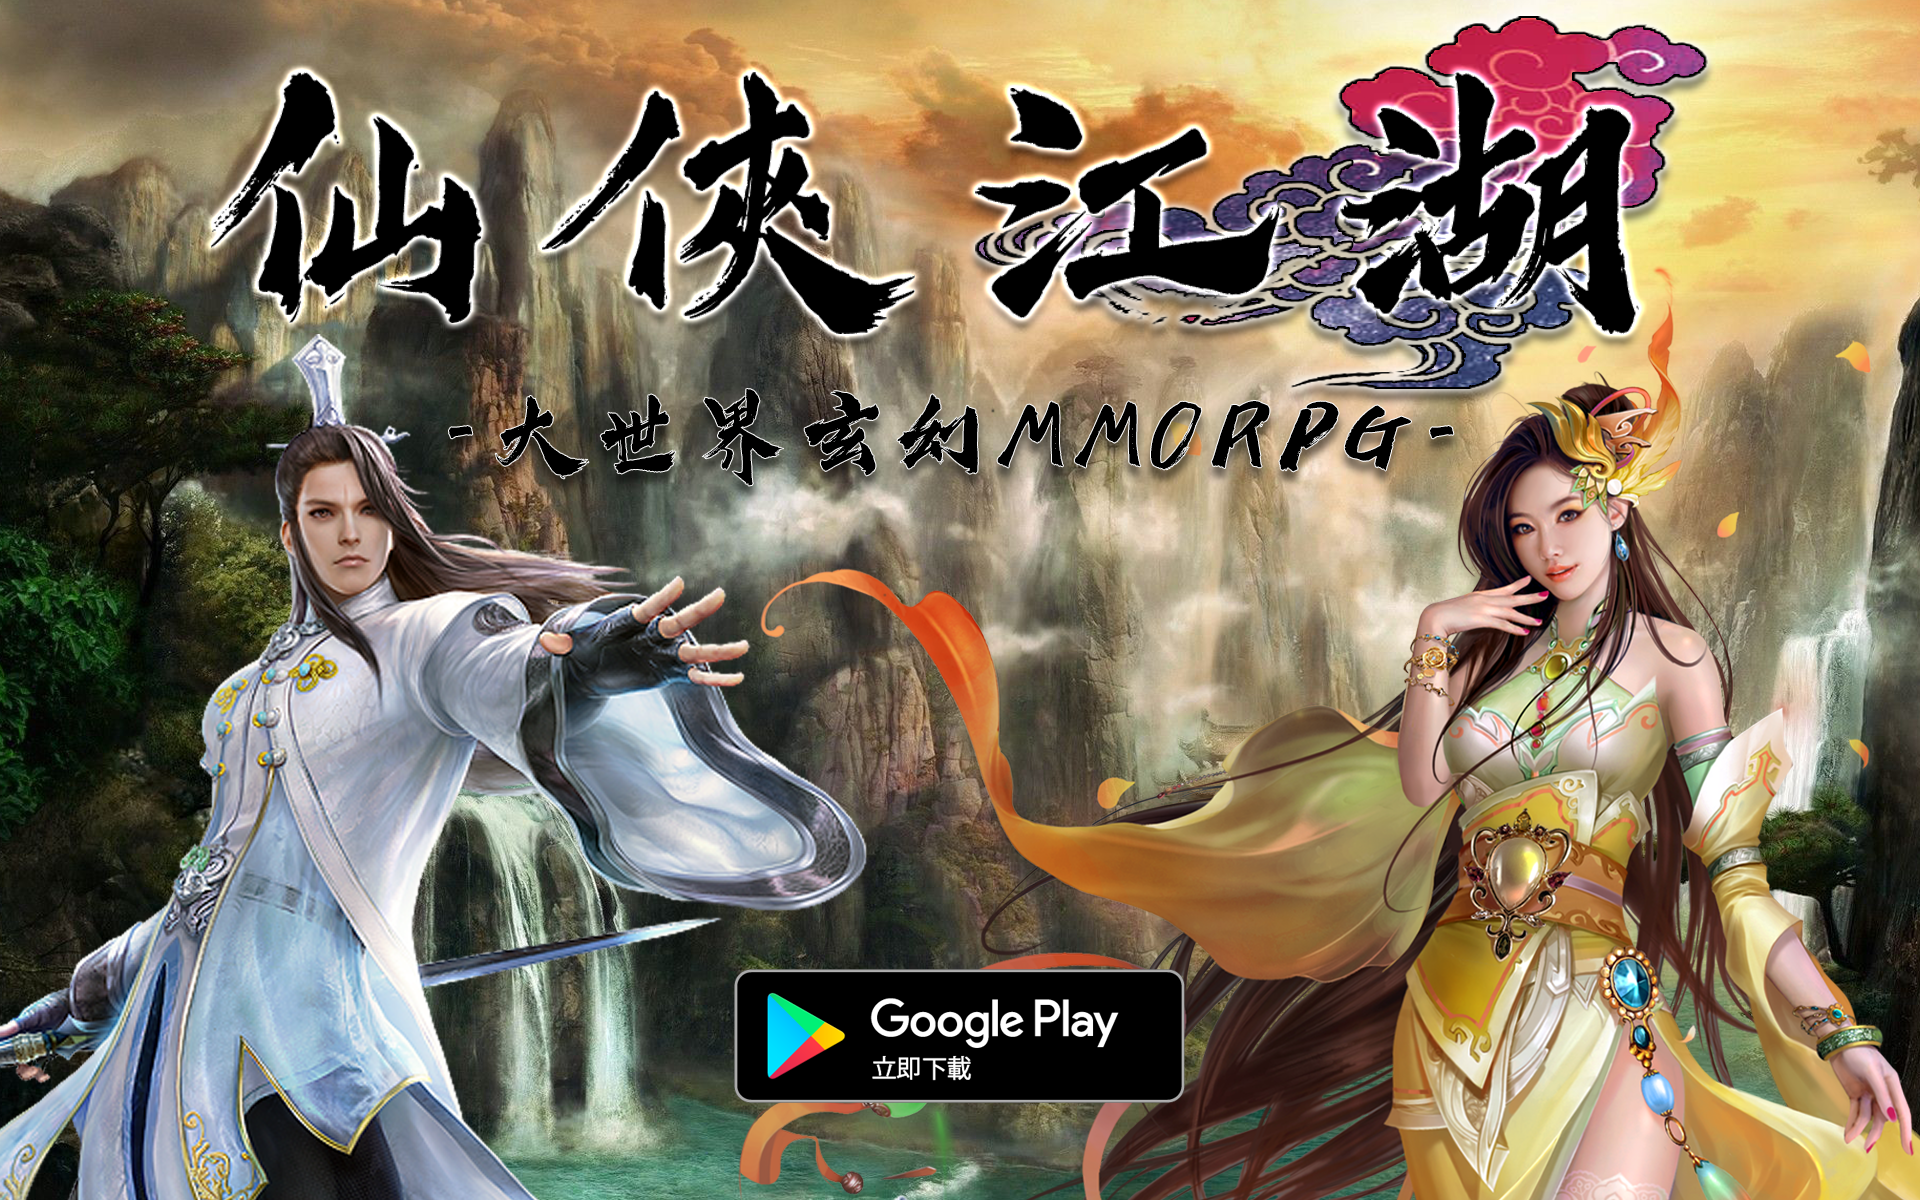 Screenshot 1 of Immortal Jianghu - မသေနိုင်သောကမ္ဘာနှင့် ကိုယ်ခံပညာ MMORPG ၏ ကြီးကျယ်သော စိုက်ပျိုးမှု 1.04